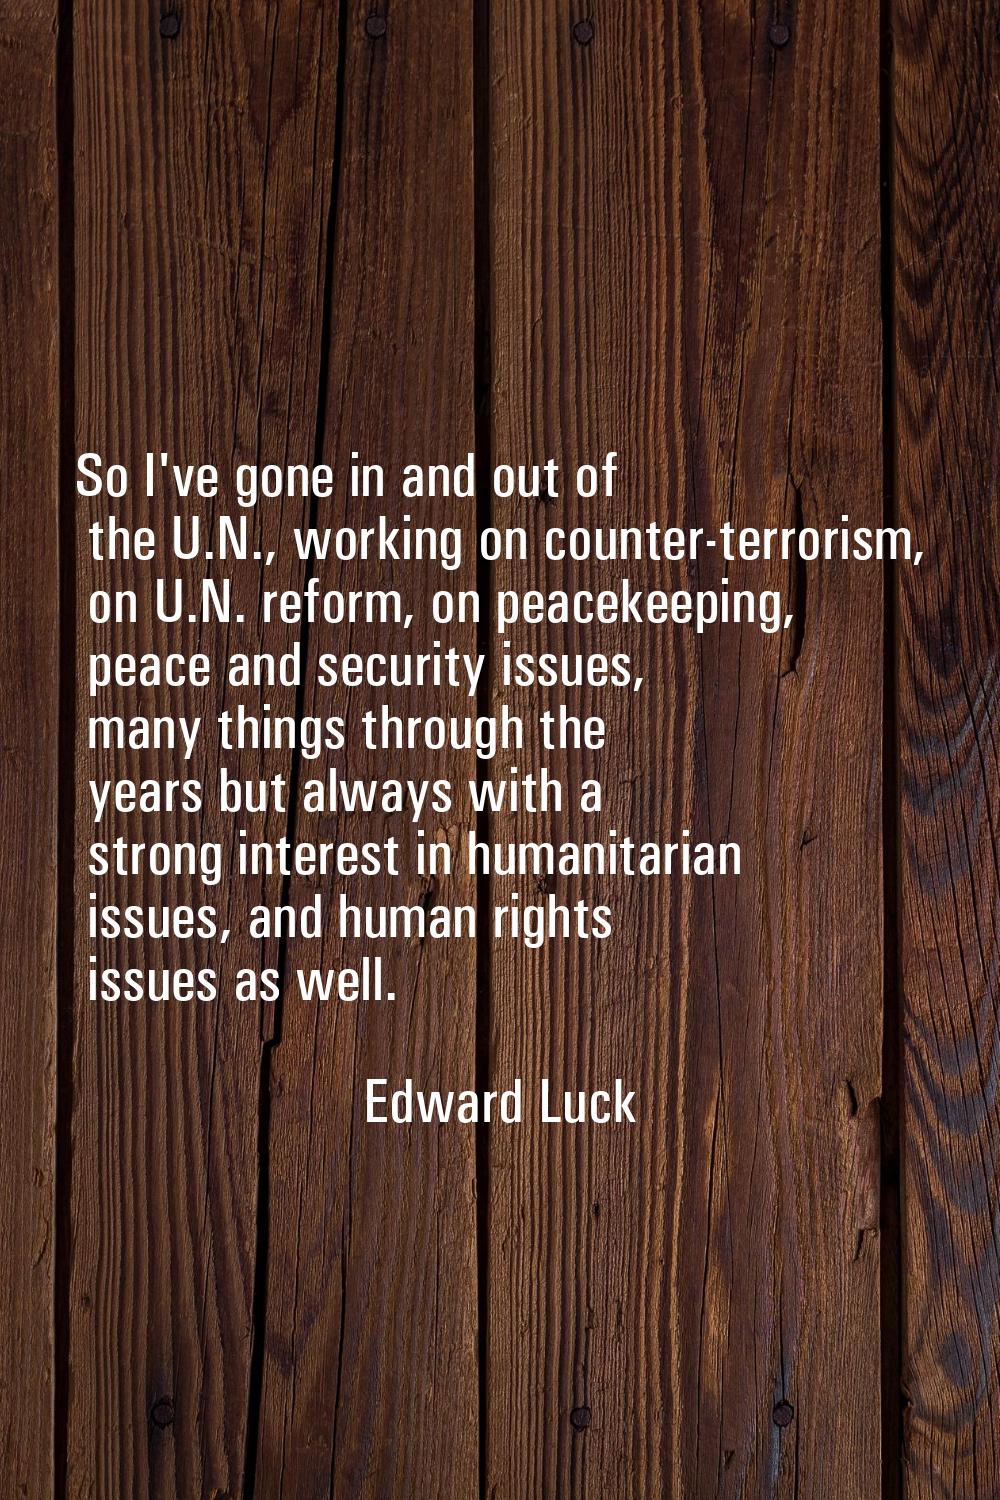 So I've gone in and out of the U.N., working on counter-terrorism, on U.N. reform, on peacekeeping,